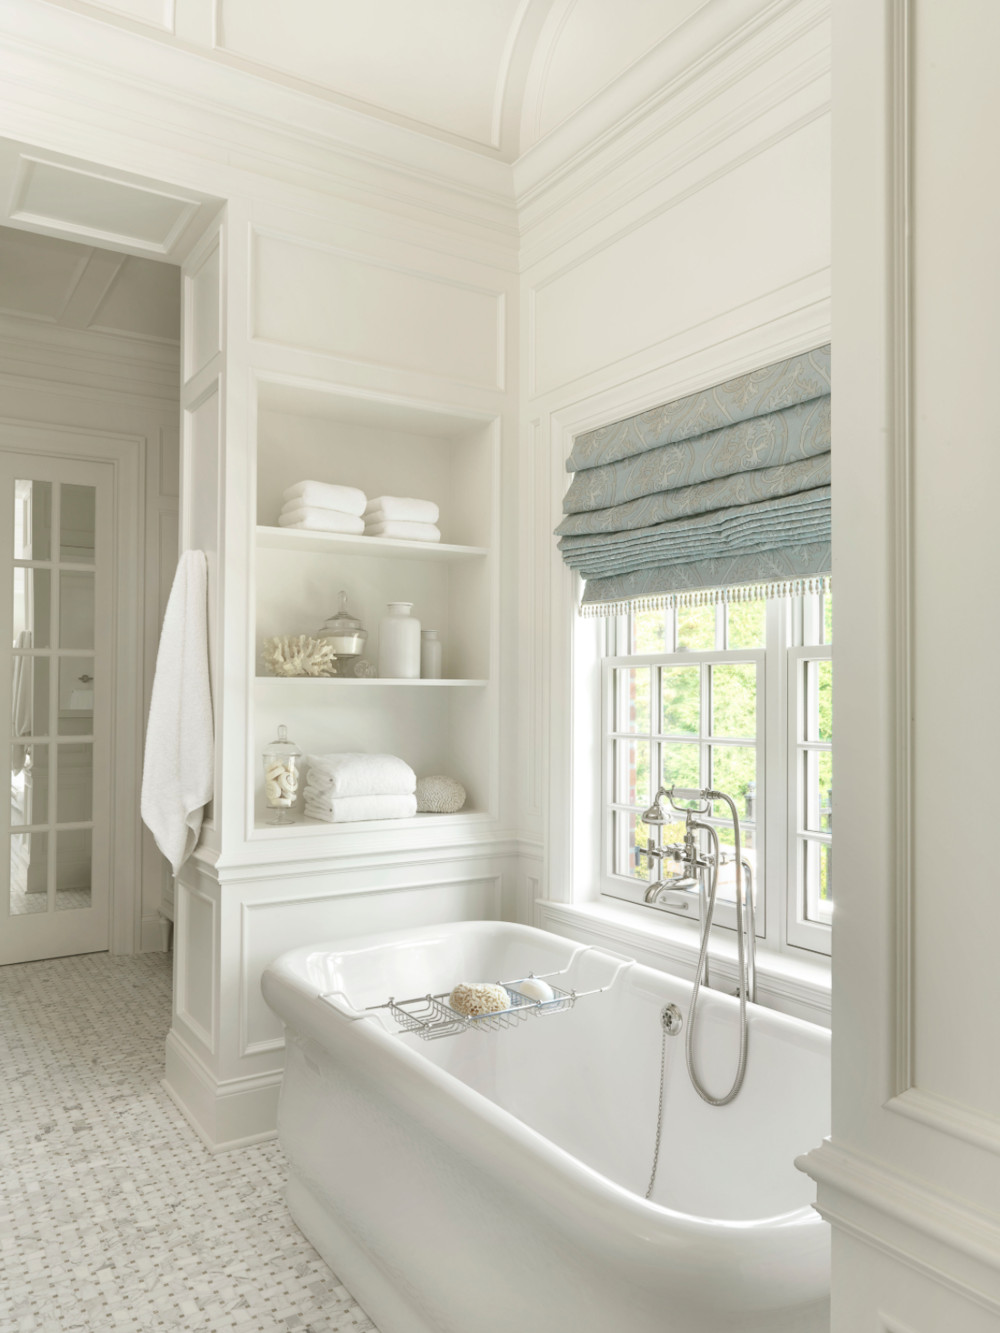 Pinterest Small Bathroom Ideas
 The 15 Most Beautiful Bathrooms on Pinterest Sanctuary